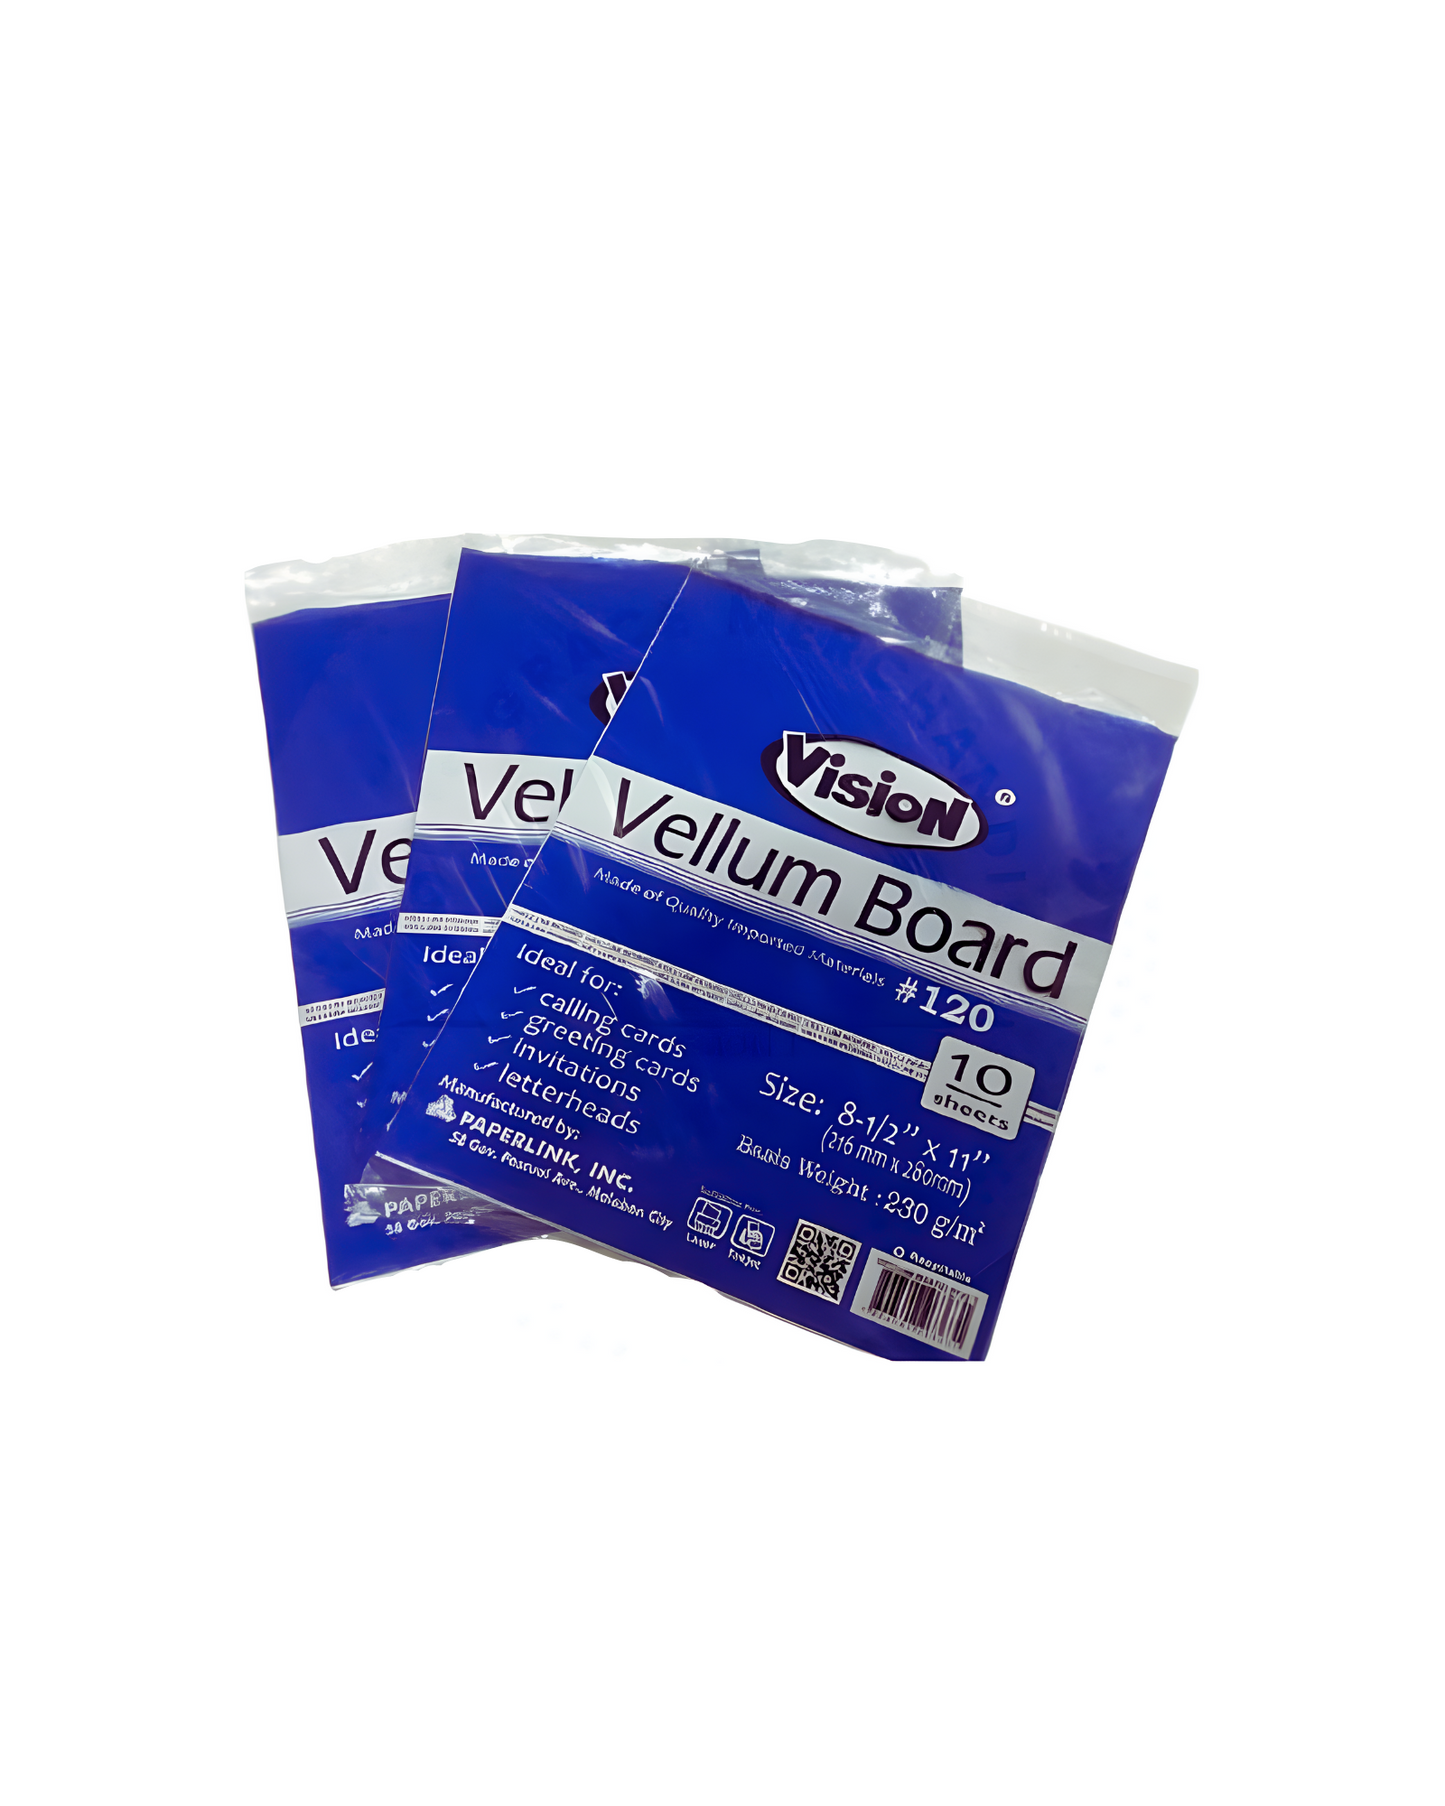 Vision Vellum Board Paper 230gsm Short (25Pack)